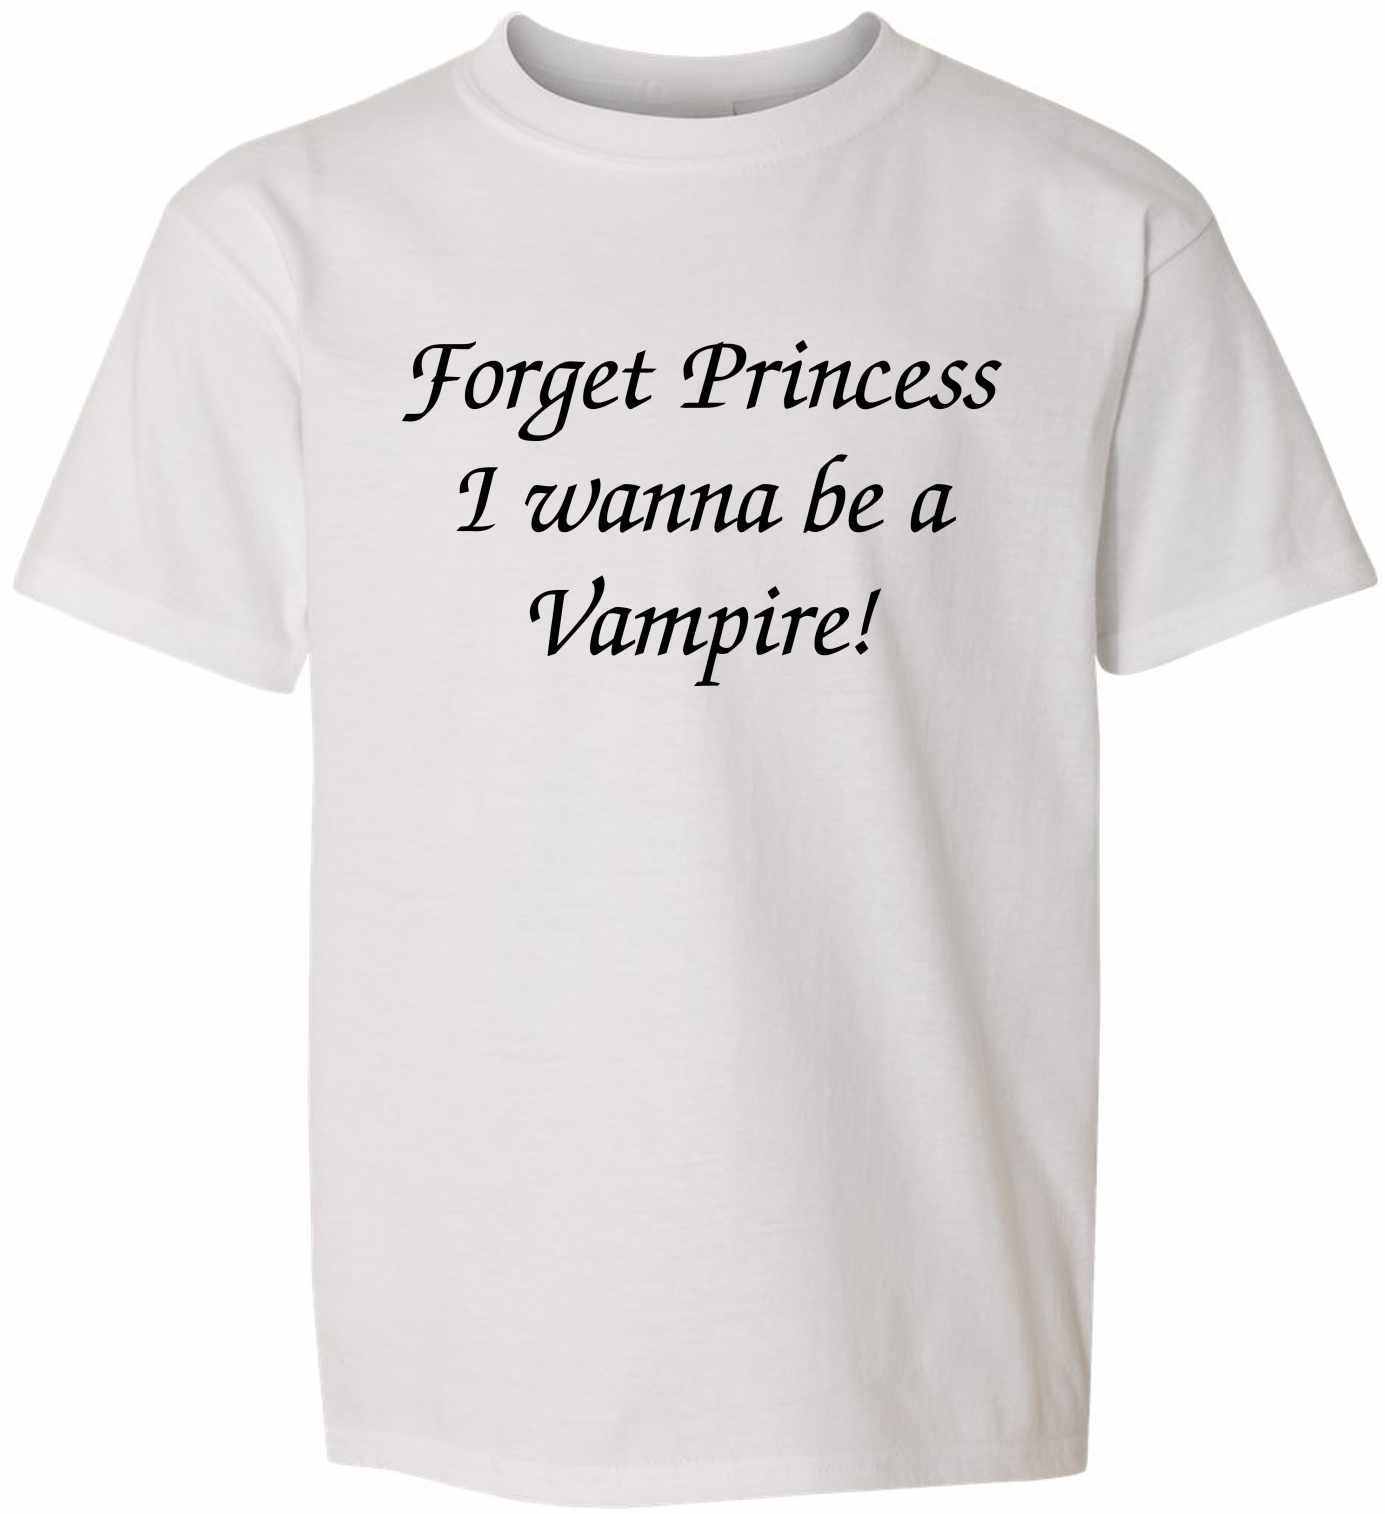 FORGET PRINCESS I WANNA BE VAMPIRE on Kids T-Shirt (#298-201)